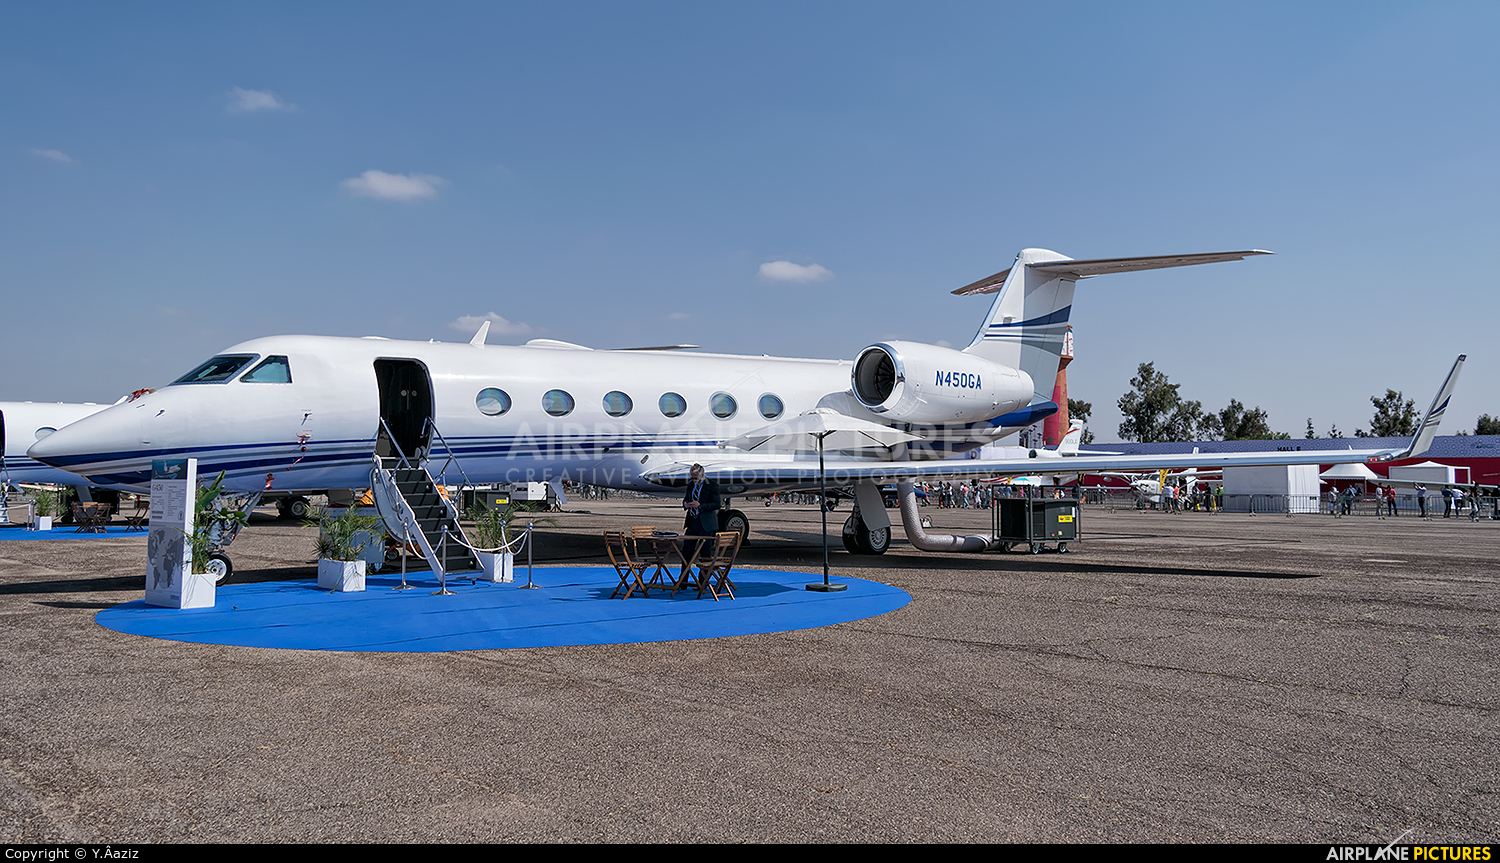 Gulfstream Aerospace Service Corp N450GA aircraft at Marrakech - Menara